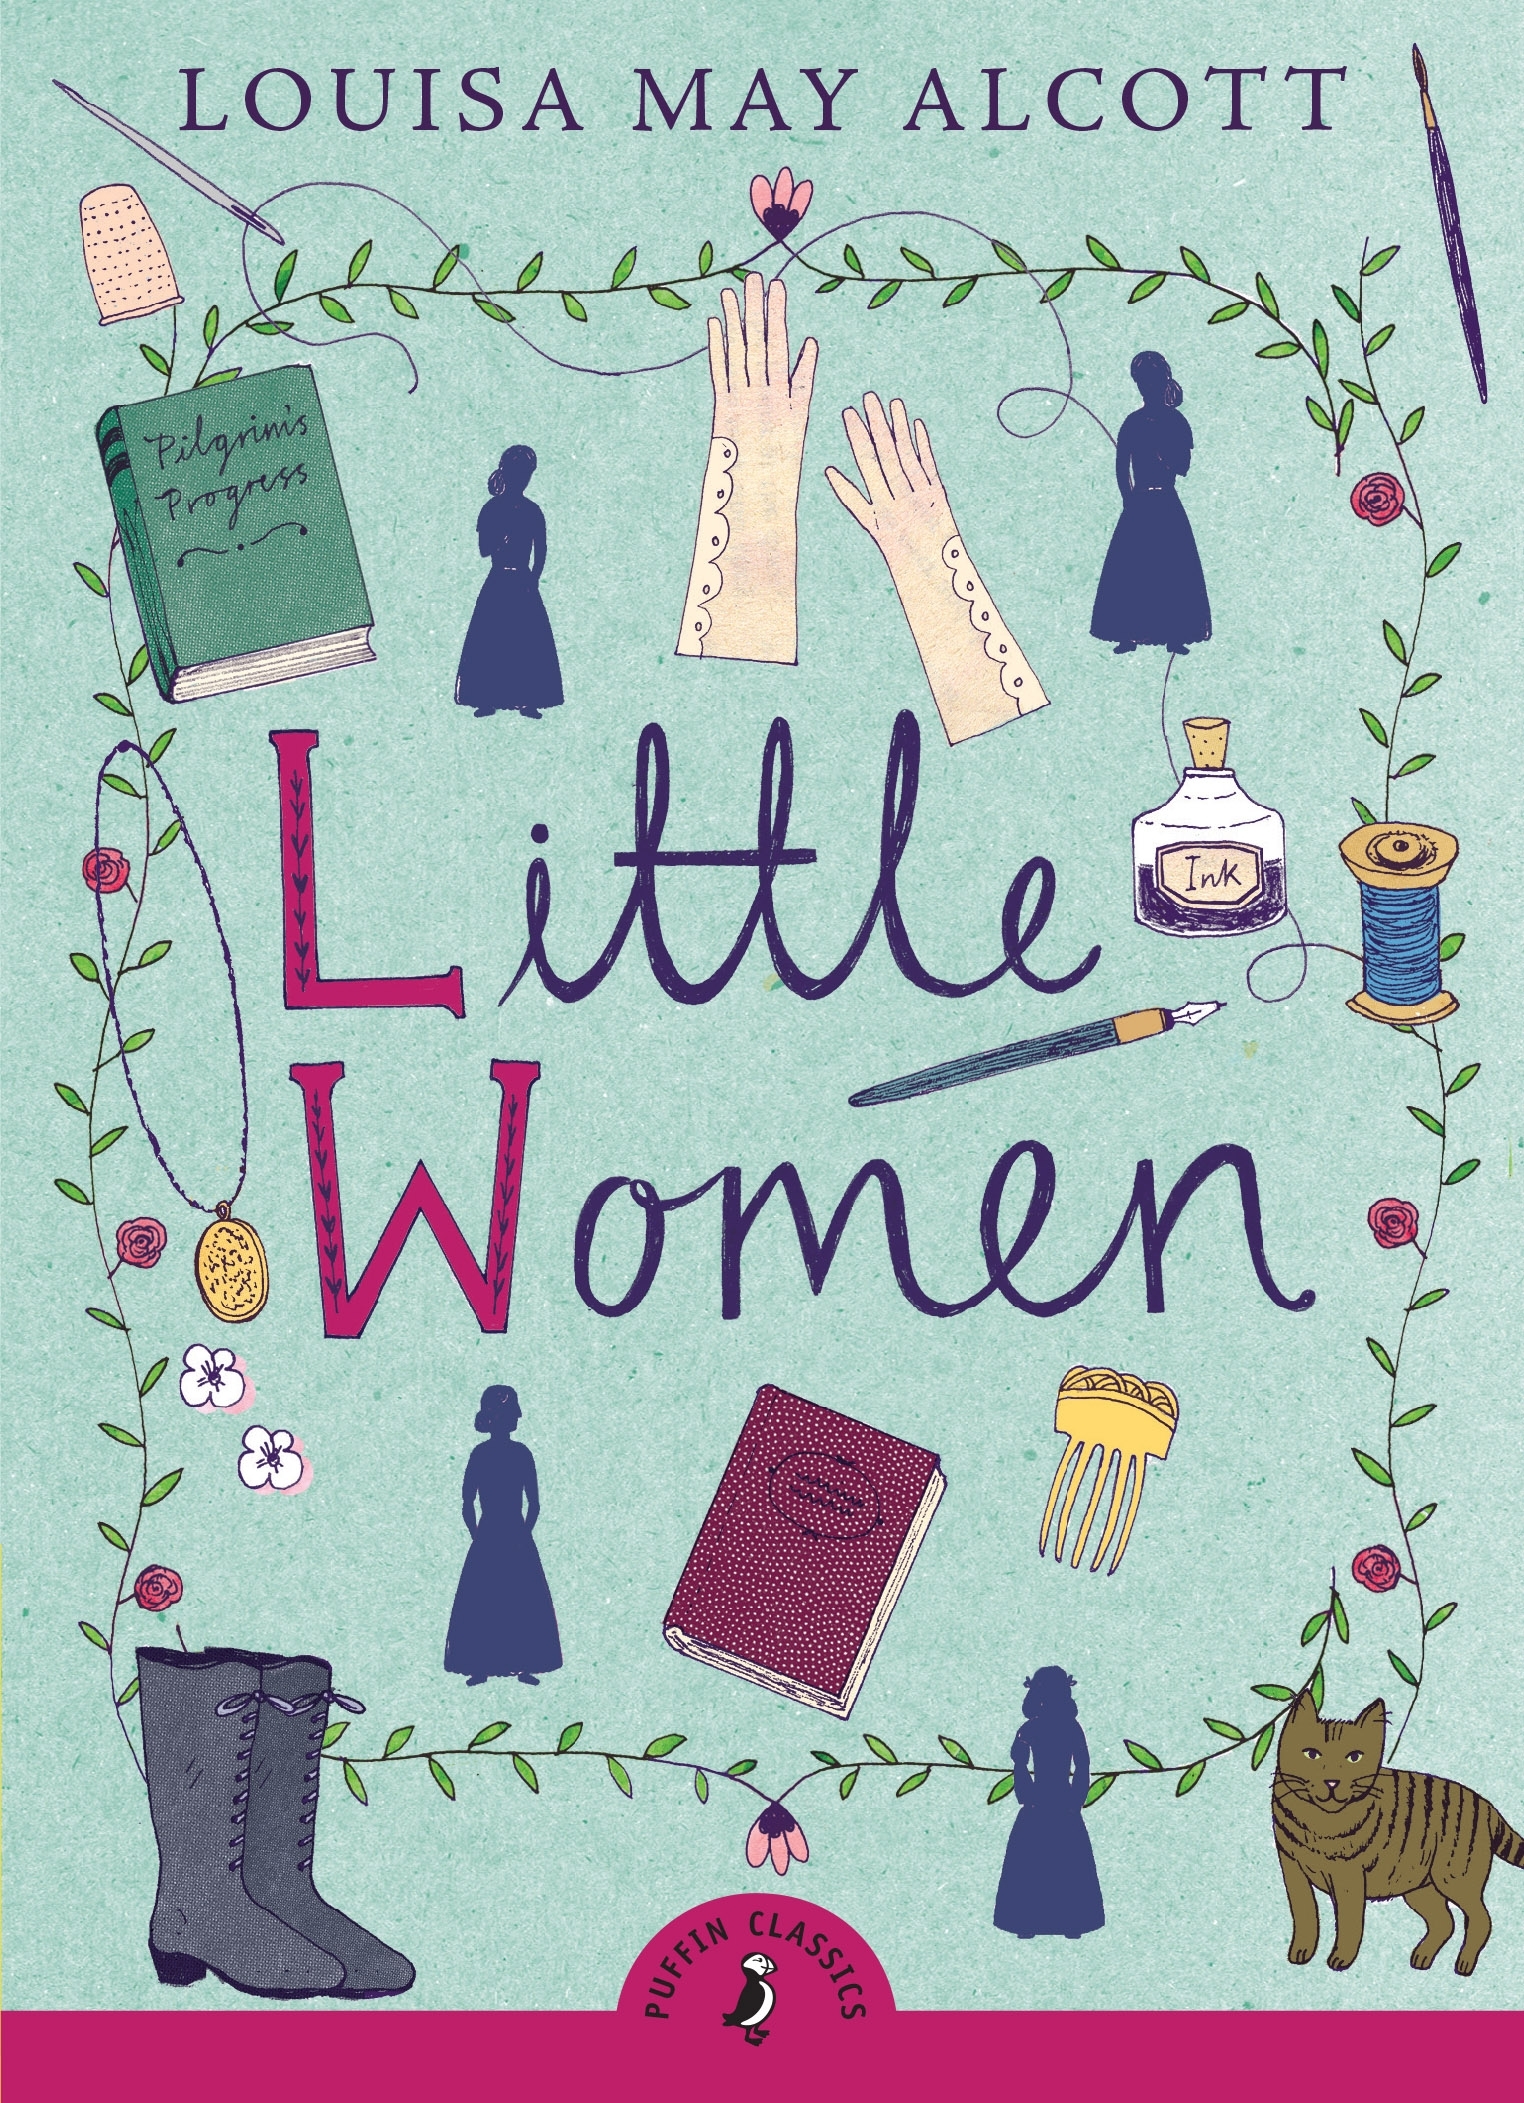 book review of little women wikipedia